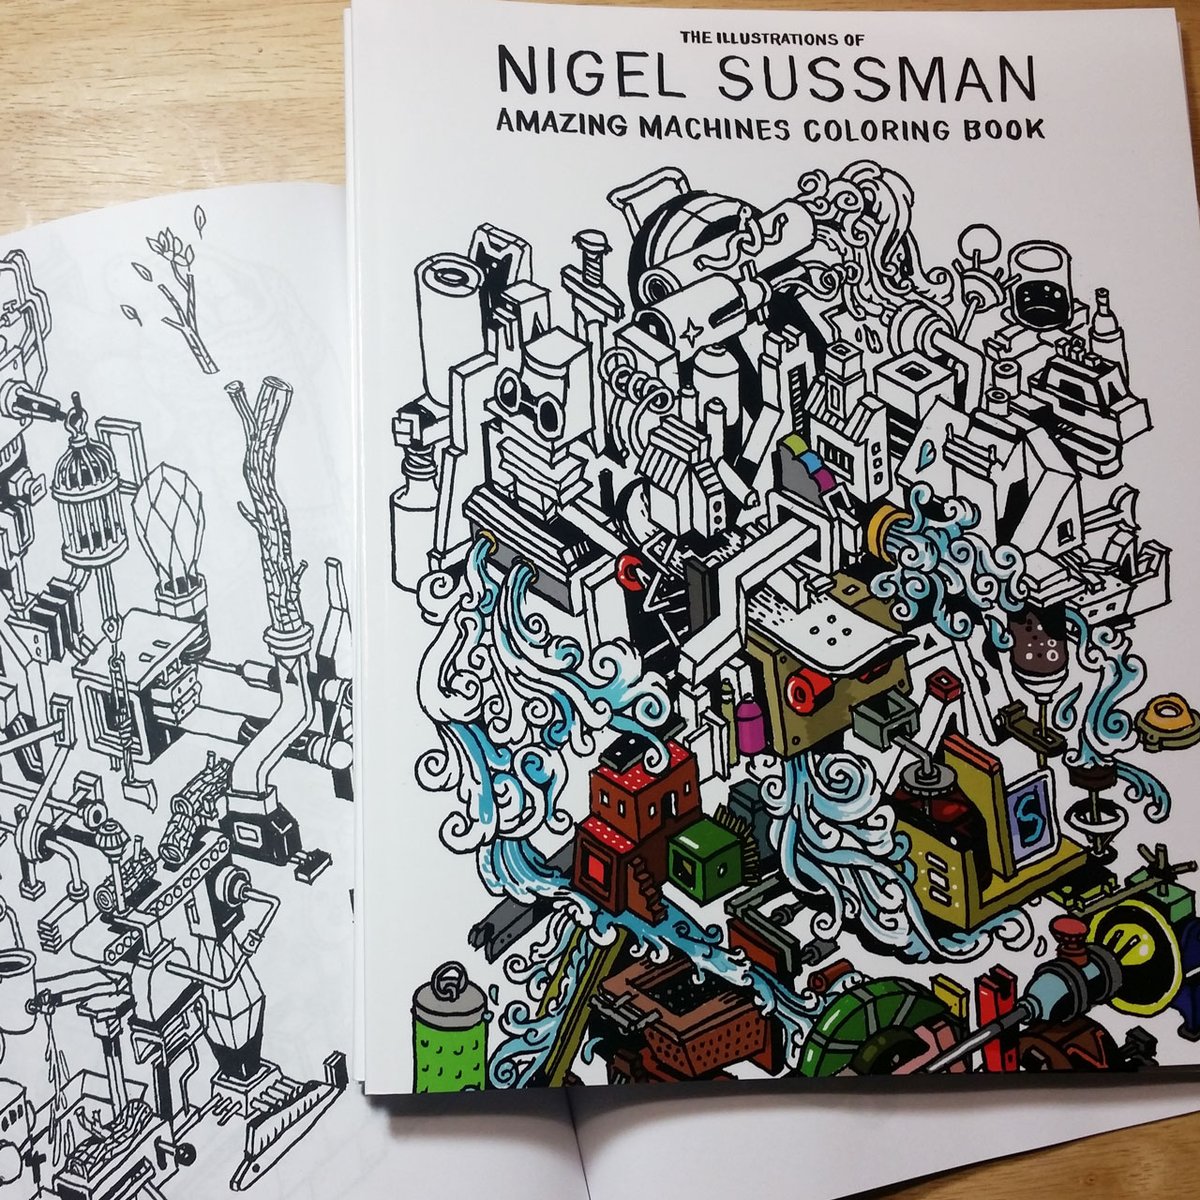 Amazing Machines Coloring Book | Nigel Sussman Illustration